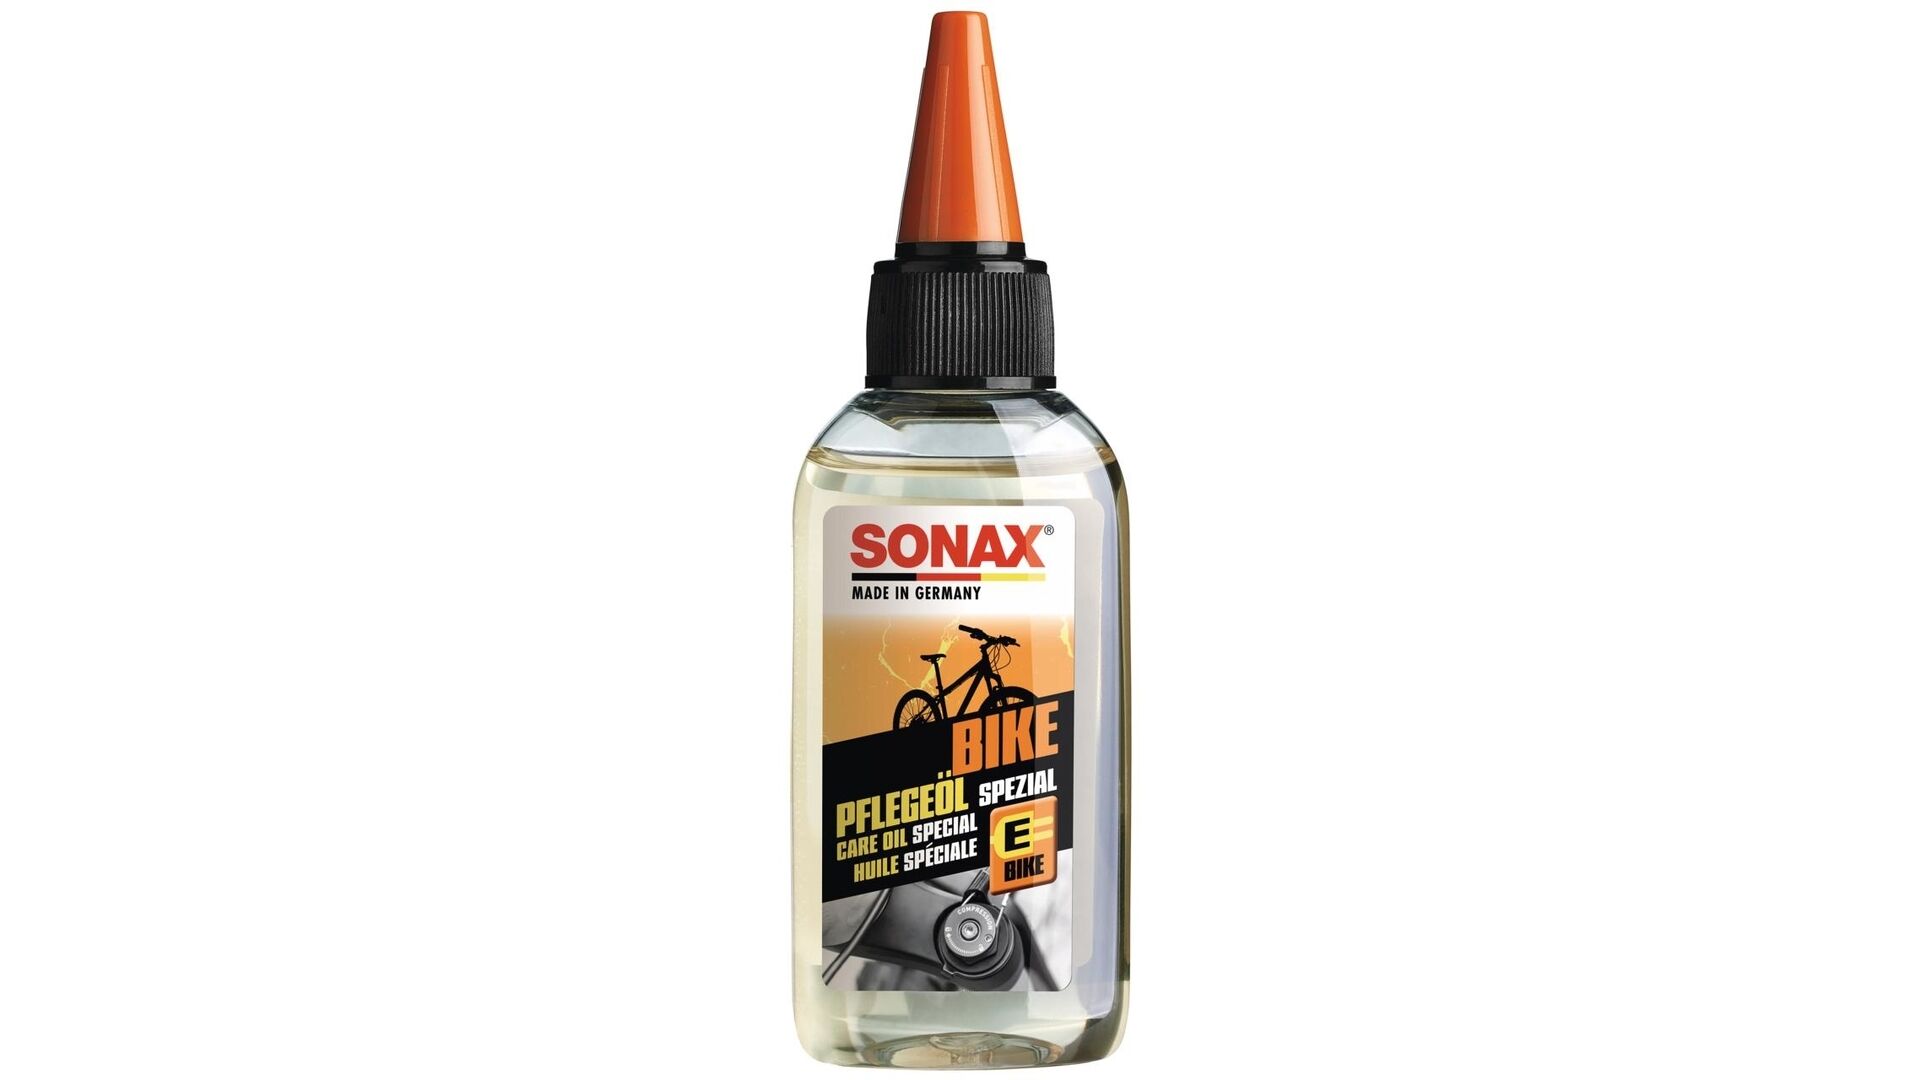 Sonax Pflegeöl Spezial